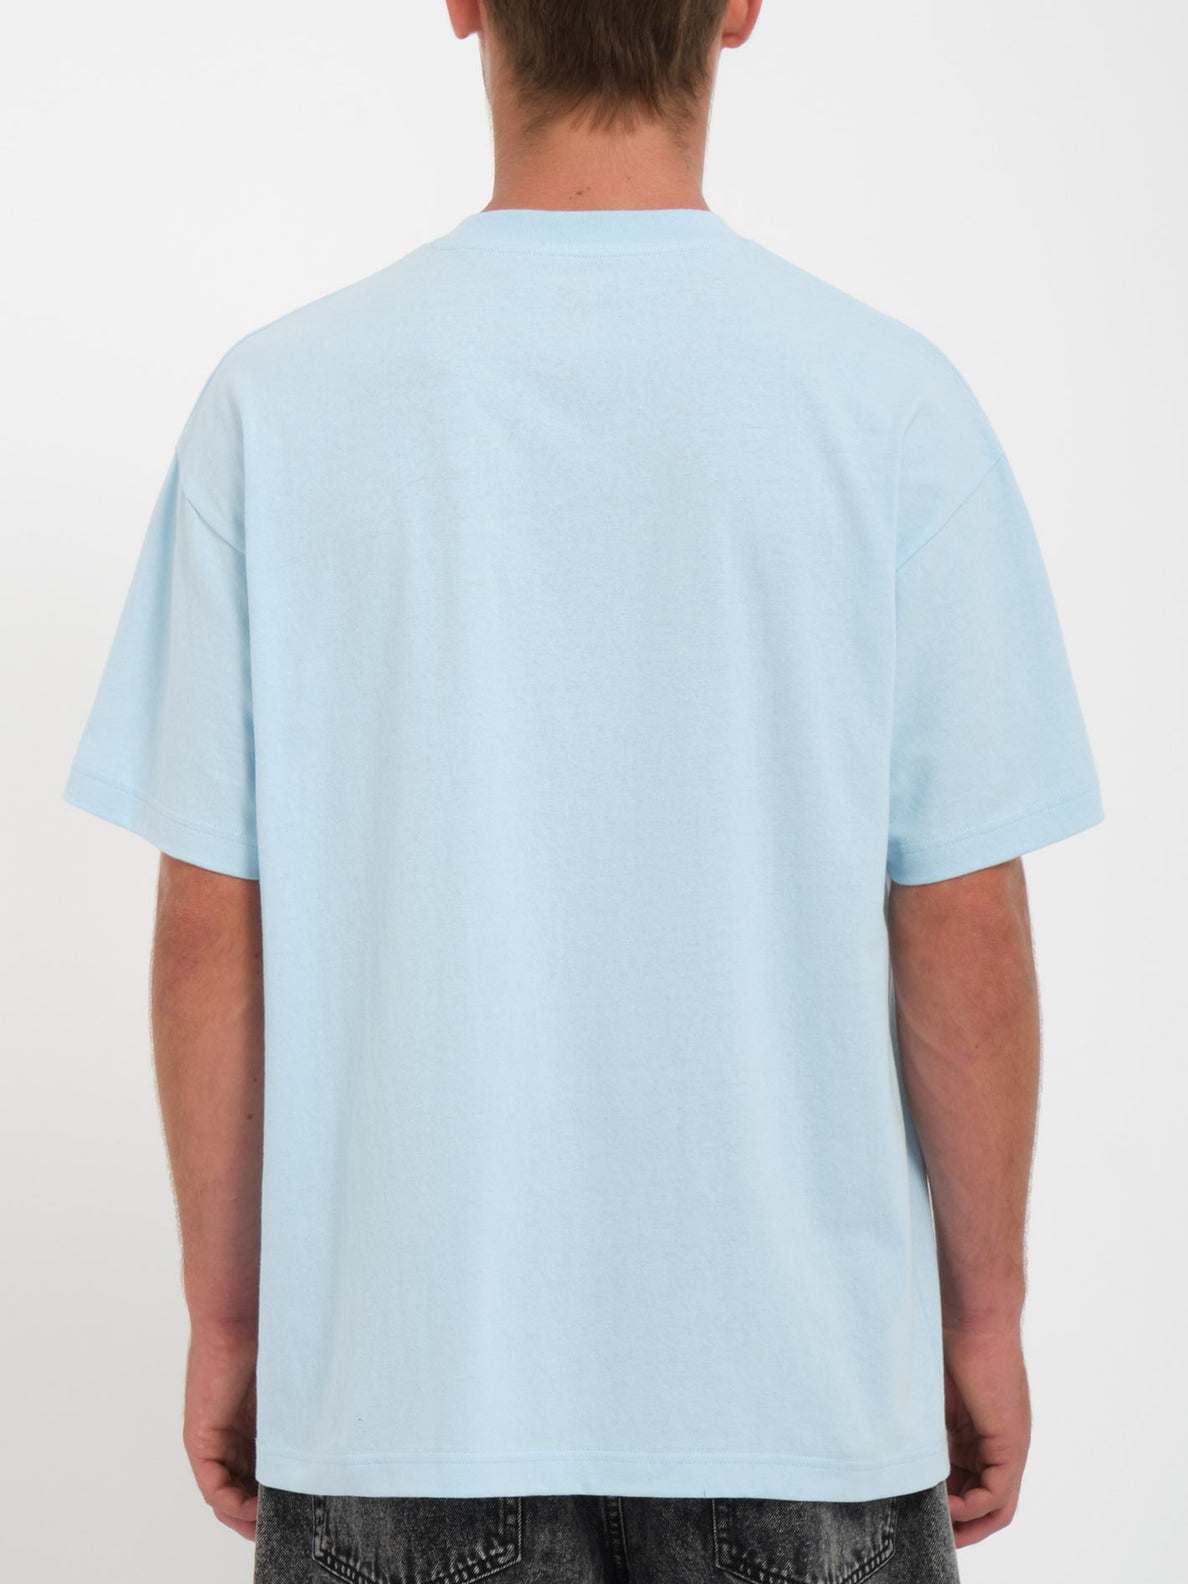 Ripple Stone Loose Short Sleeve Tee Shirt - Misty Blue